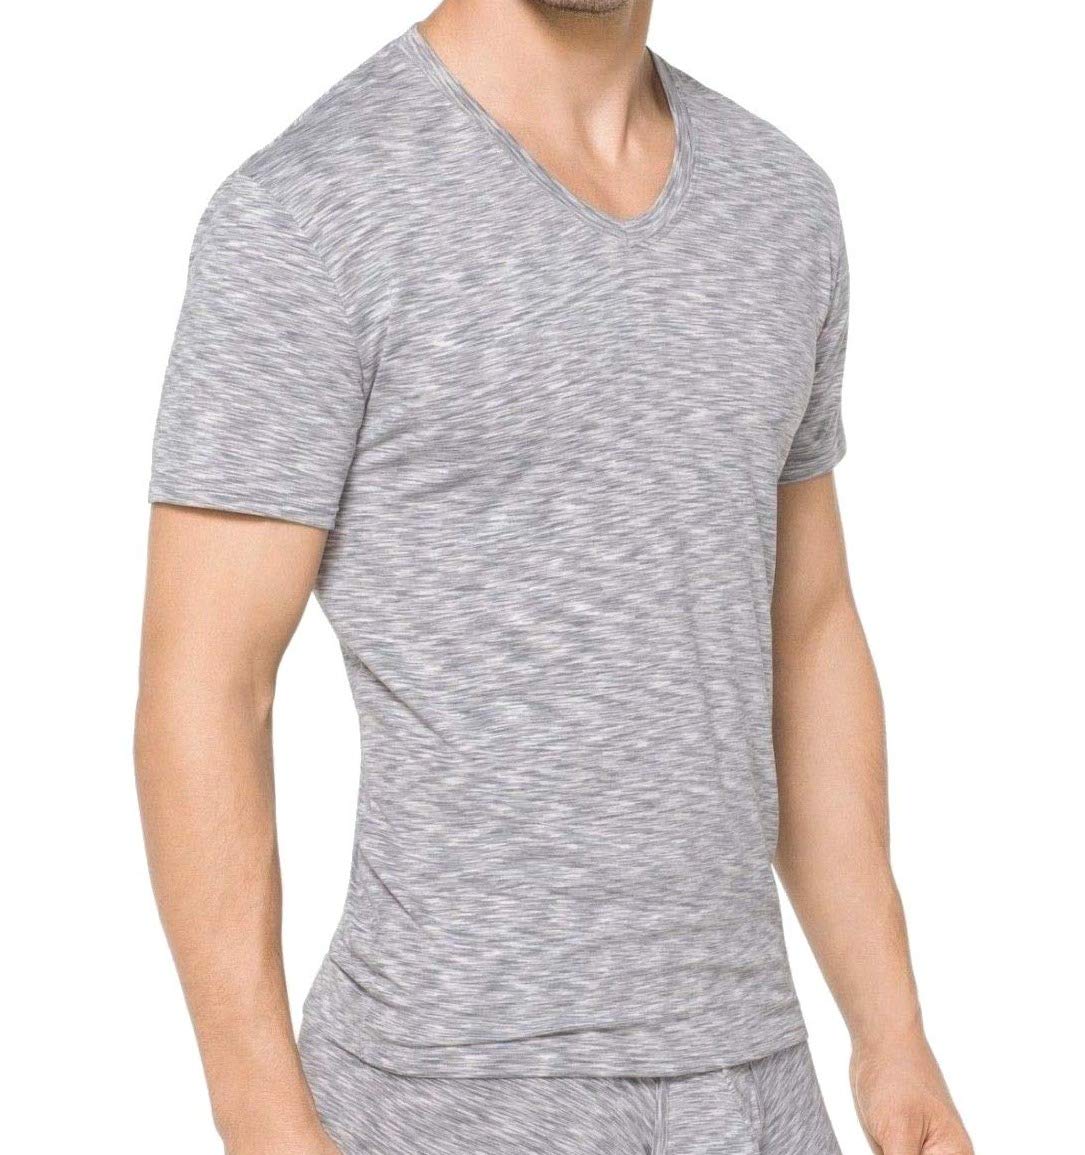 Michael Kors Dynamic Stretch Athletic fit Lightweight Men’s Luxury V-Neck T-Shirt S82V1161 White & Black